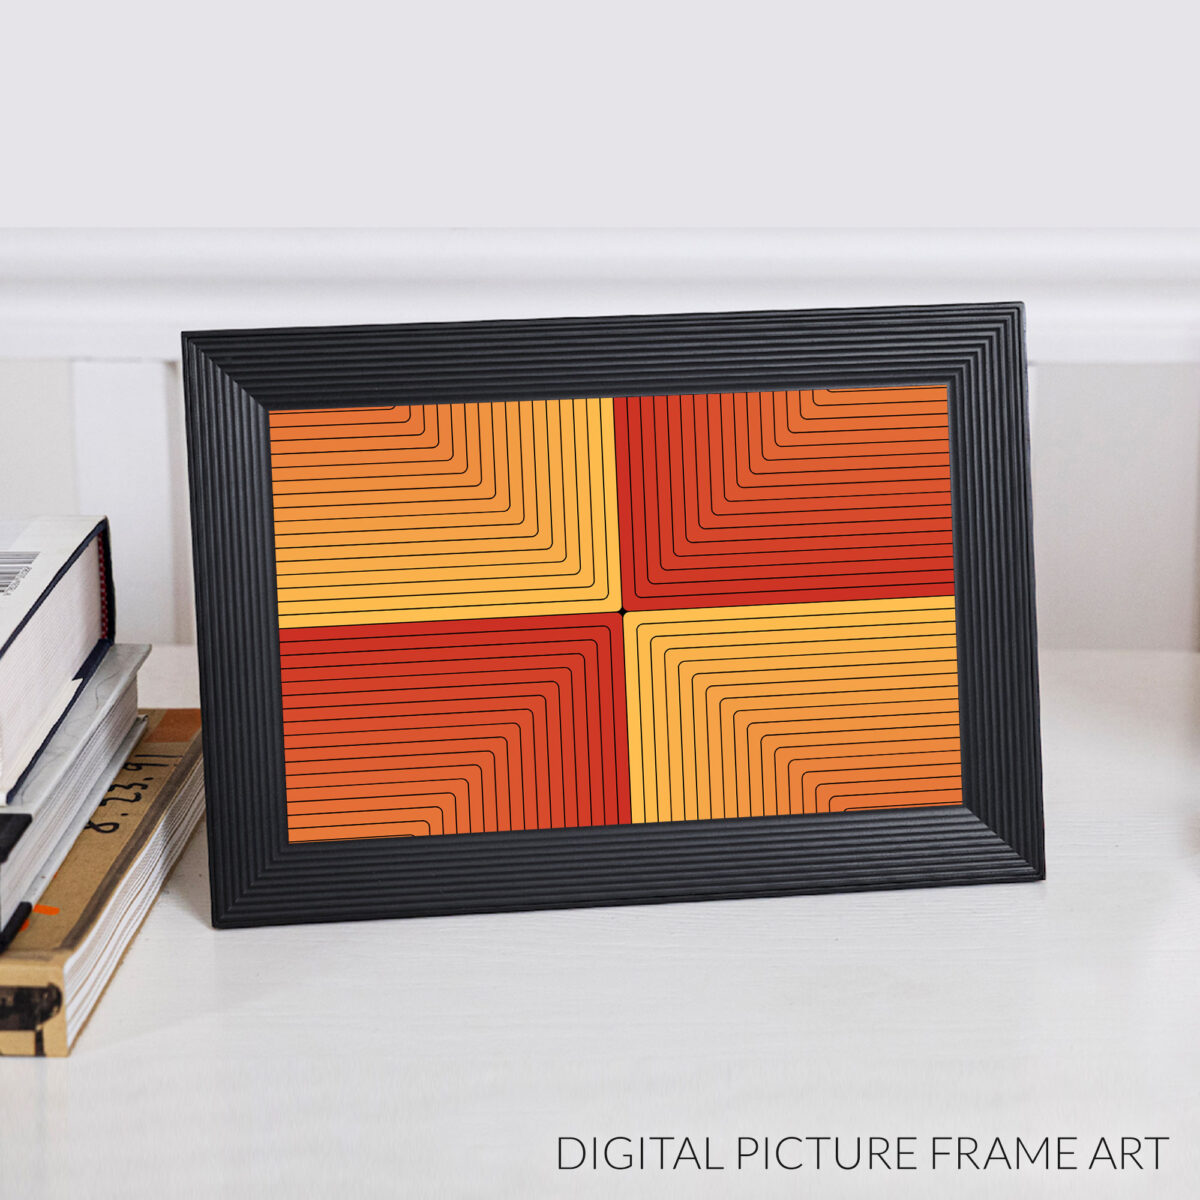 Scorcher digital wallpaper design in a digital picture frame.